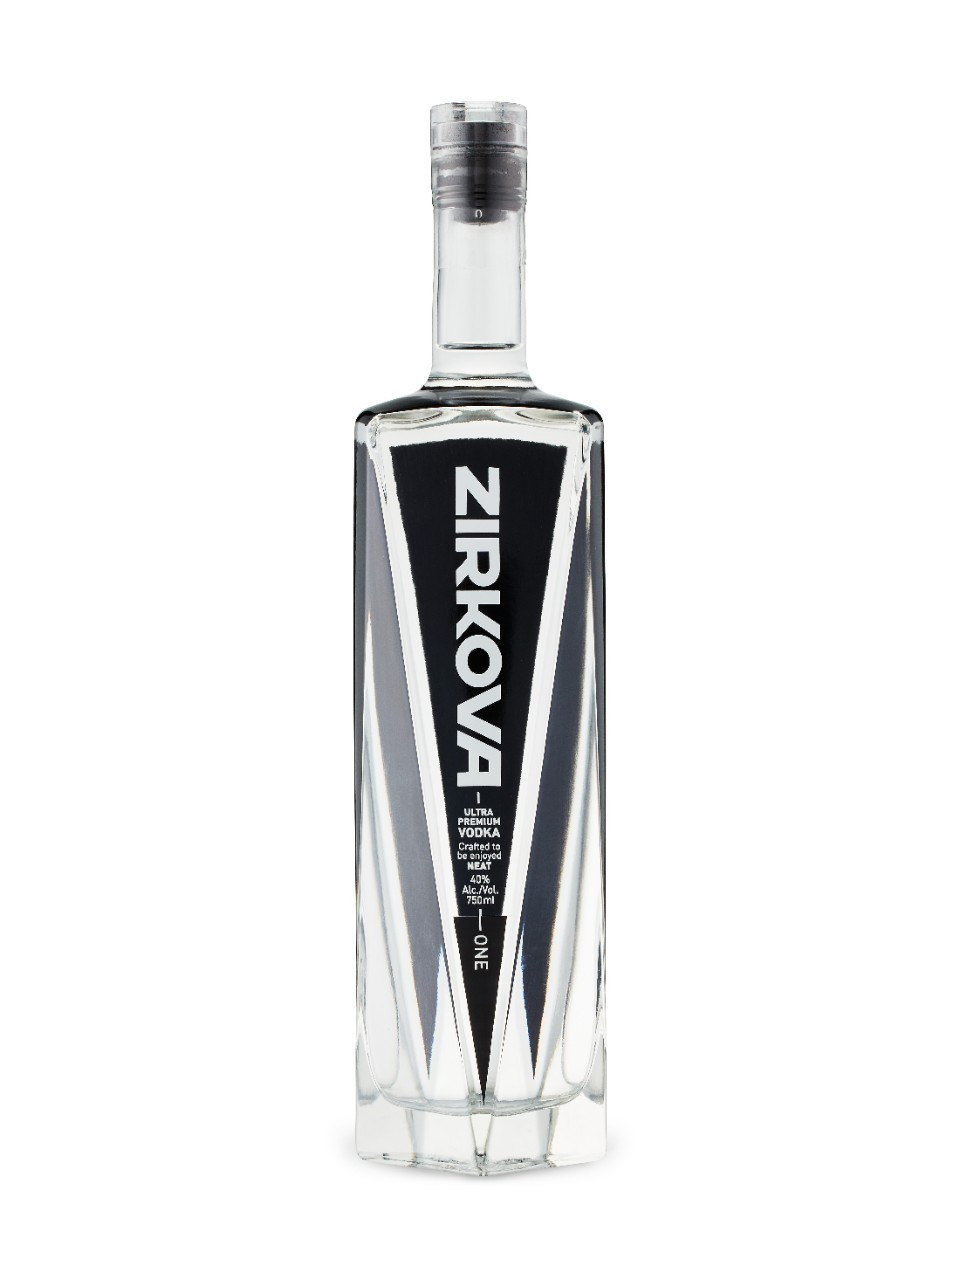 Zirkova one ultra premium vodka  750 ml bottle